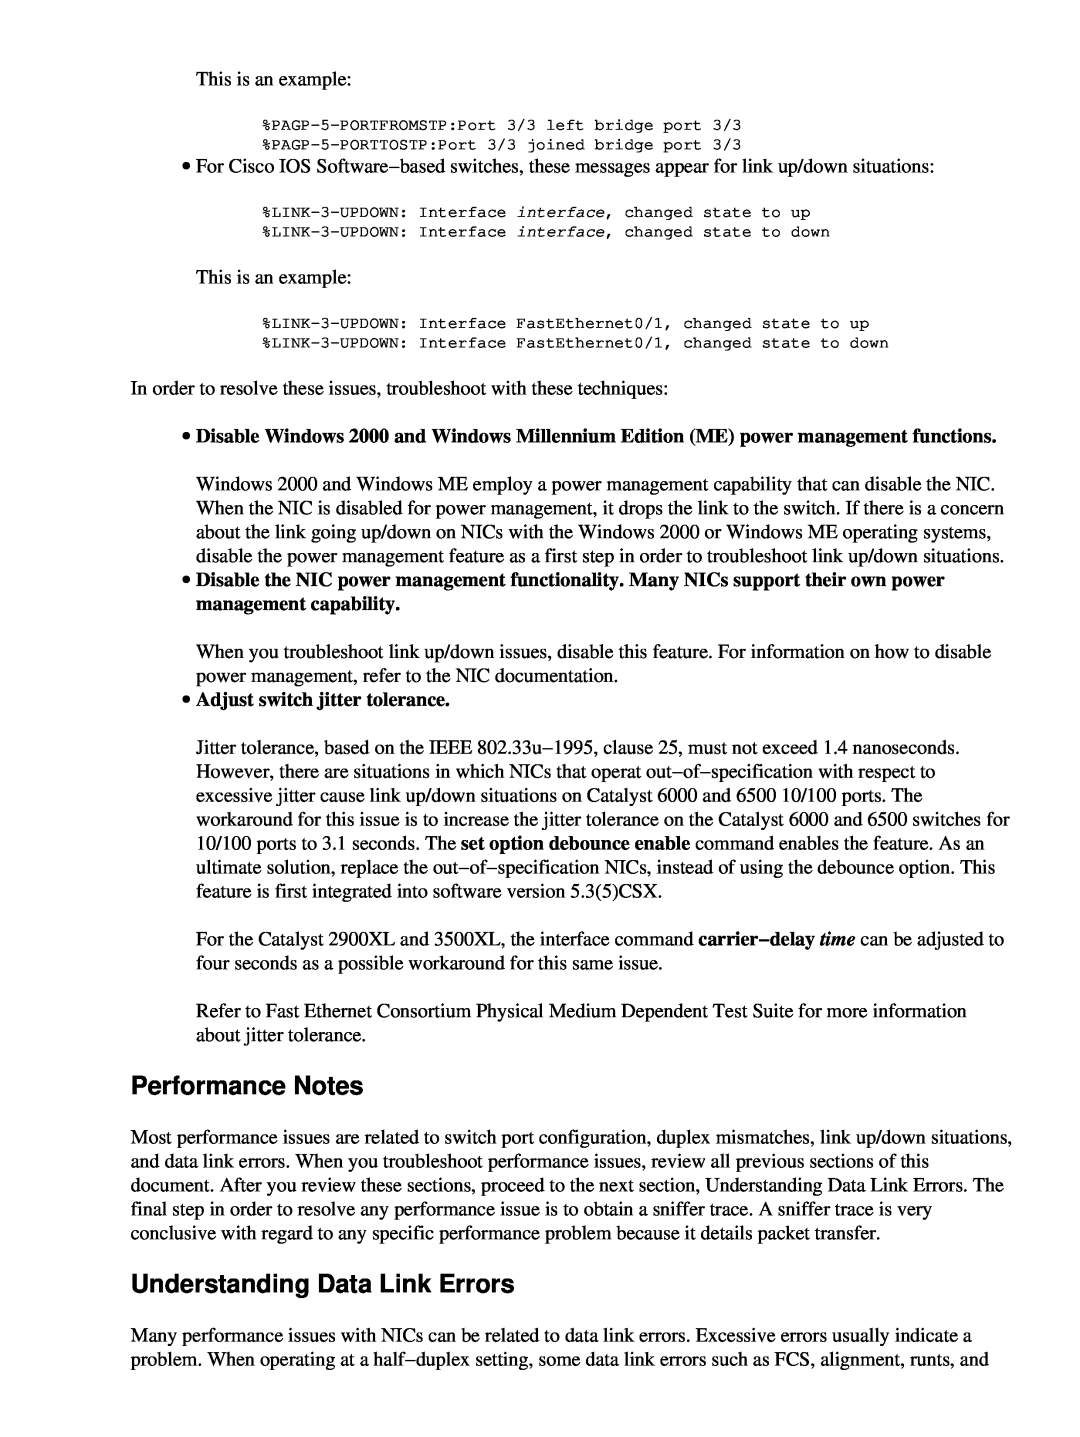 Cisco Systems 17053 appendix Performance Notes, Understanding Data Link Errors 